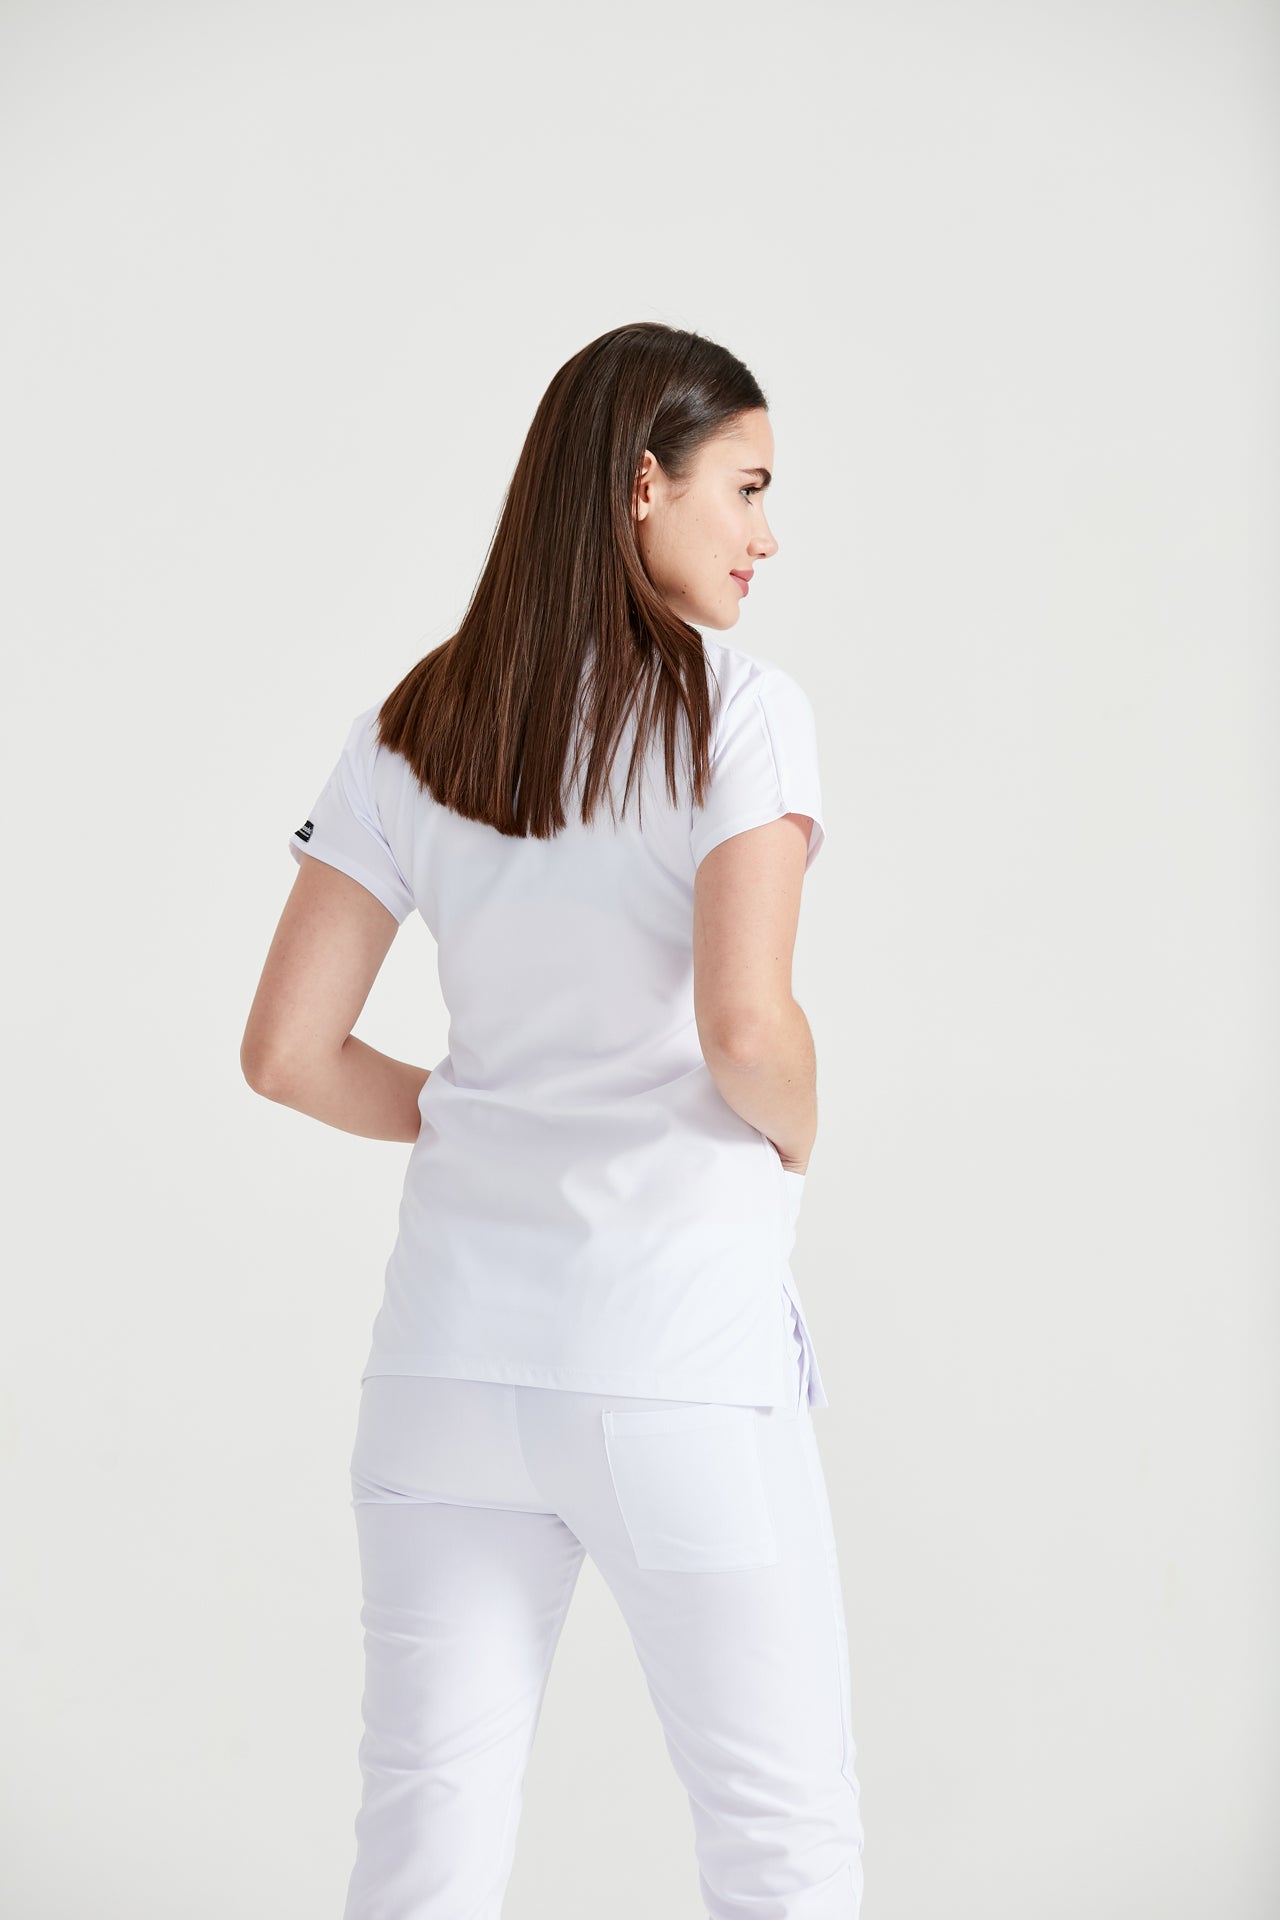 Asistenta medicala imbracata in costum clasic alb, vedere din spate